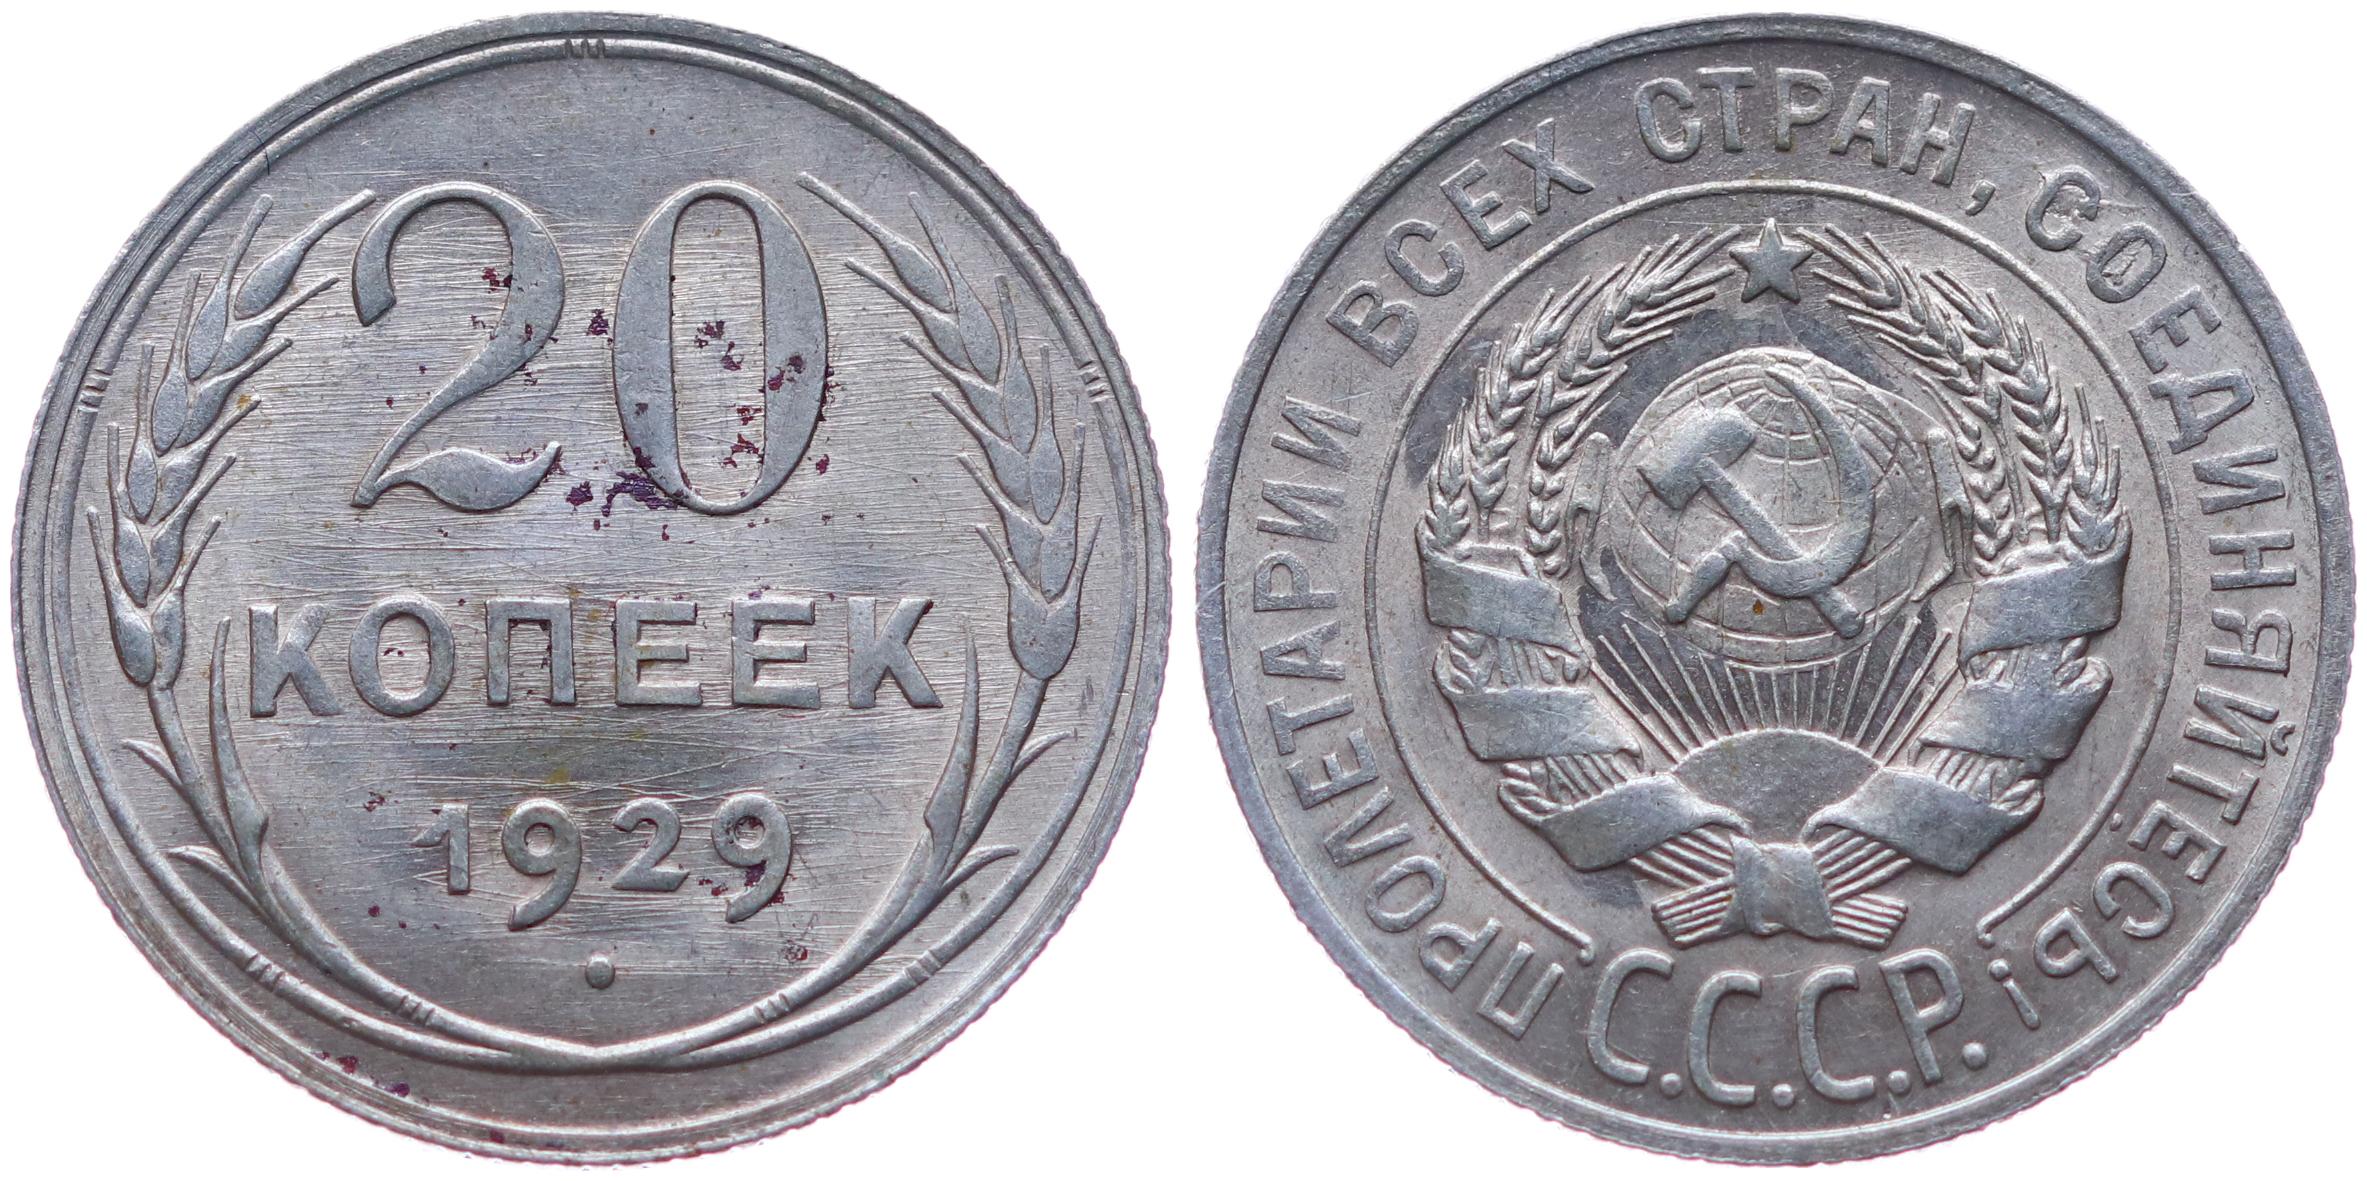 20 копеек 1924 года. 10 Копеек 1925 серебро. 20 Копеек 1927 серебро. Серебряные 20 копеек 1931 года. Монеты СССР 1925 года.